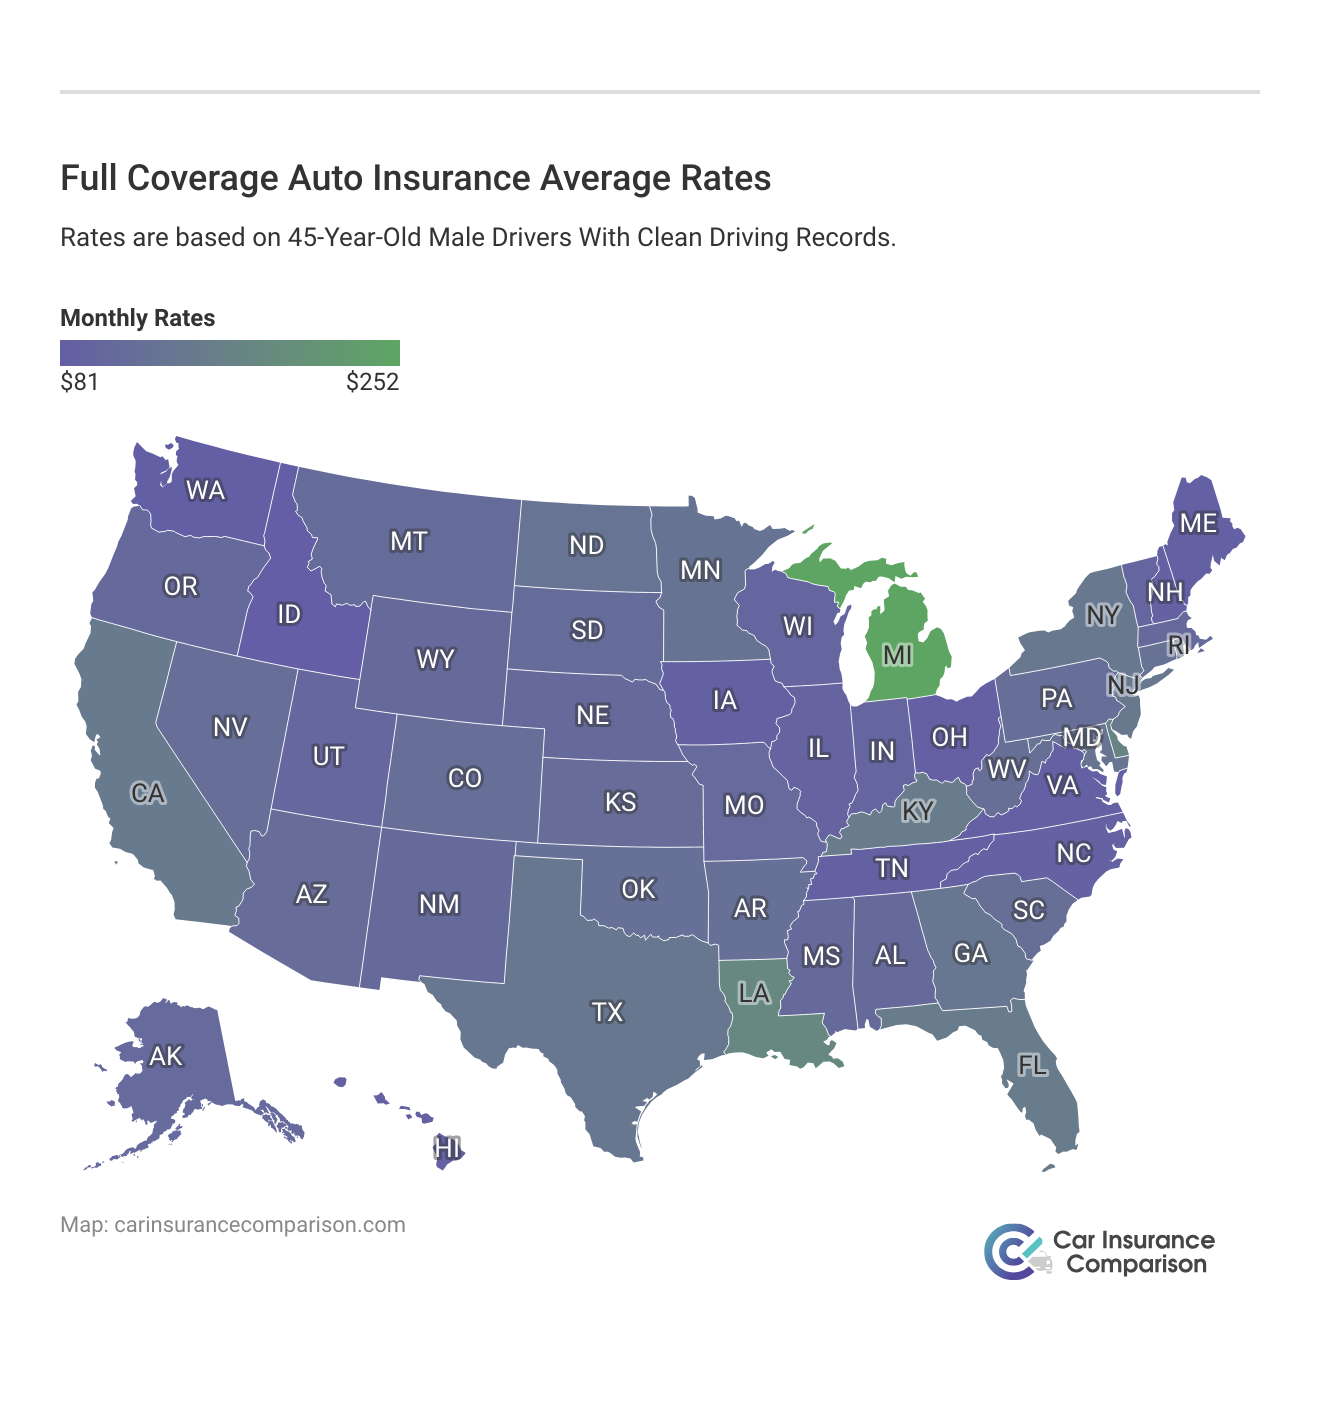 <h3>Full Coverage Auto Insurance Average Rates</h3>